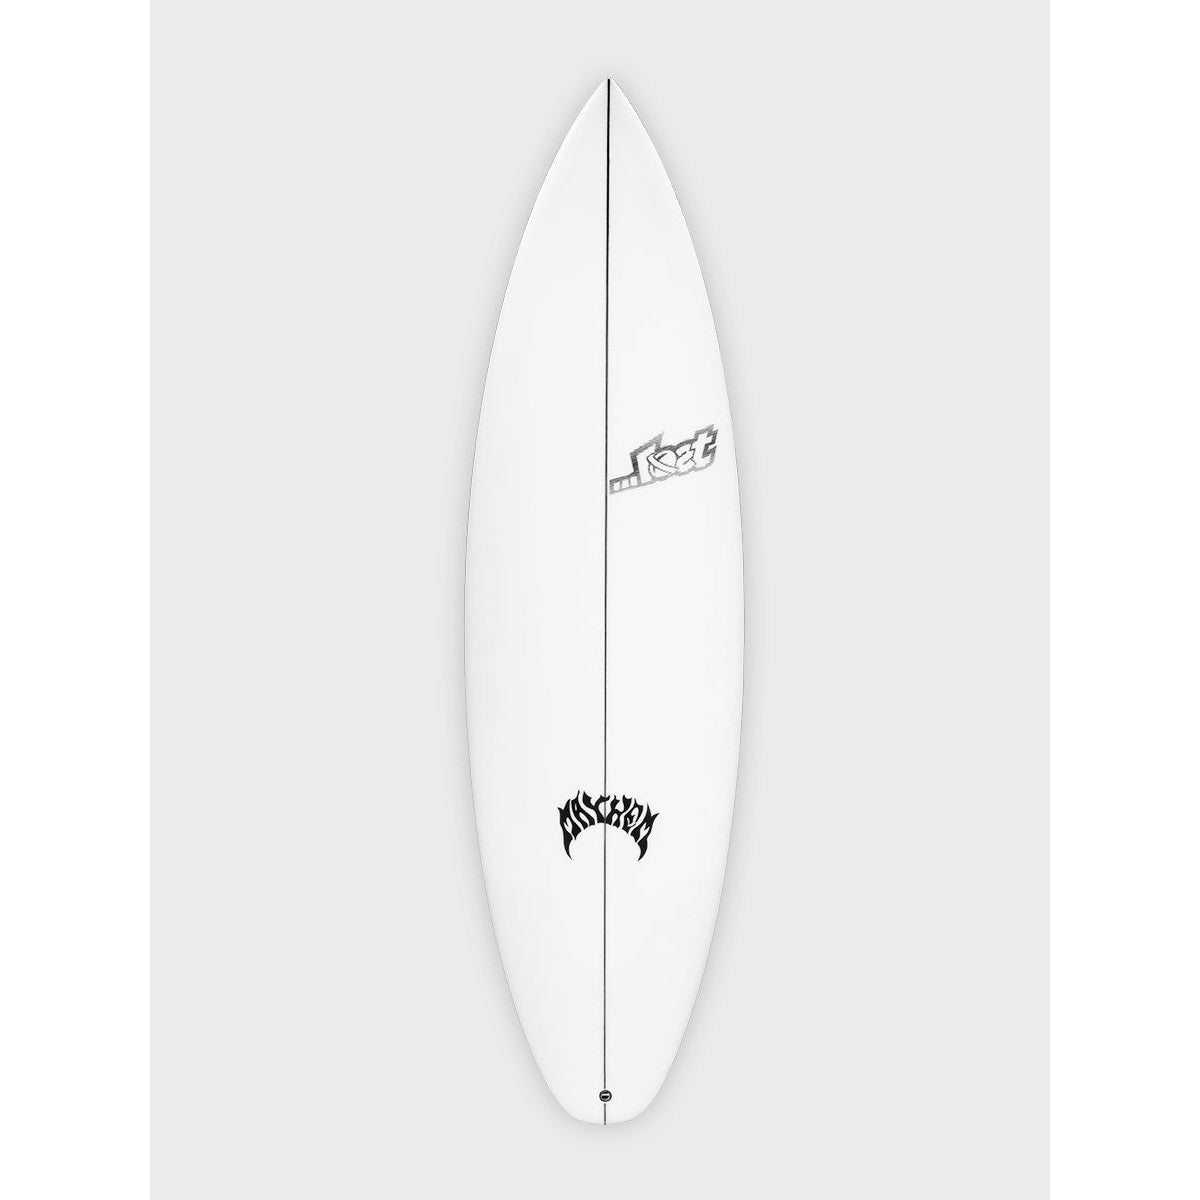 lost_driver3.0_squash-surfboards-deck-galway-ireland-blacksheepsurfco